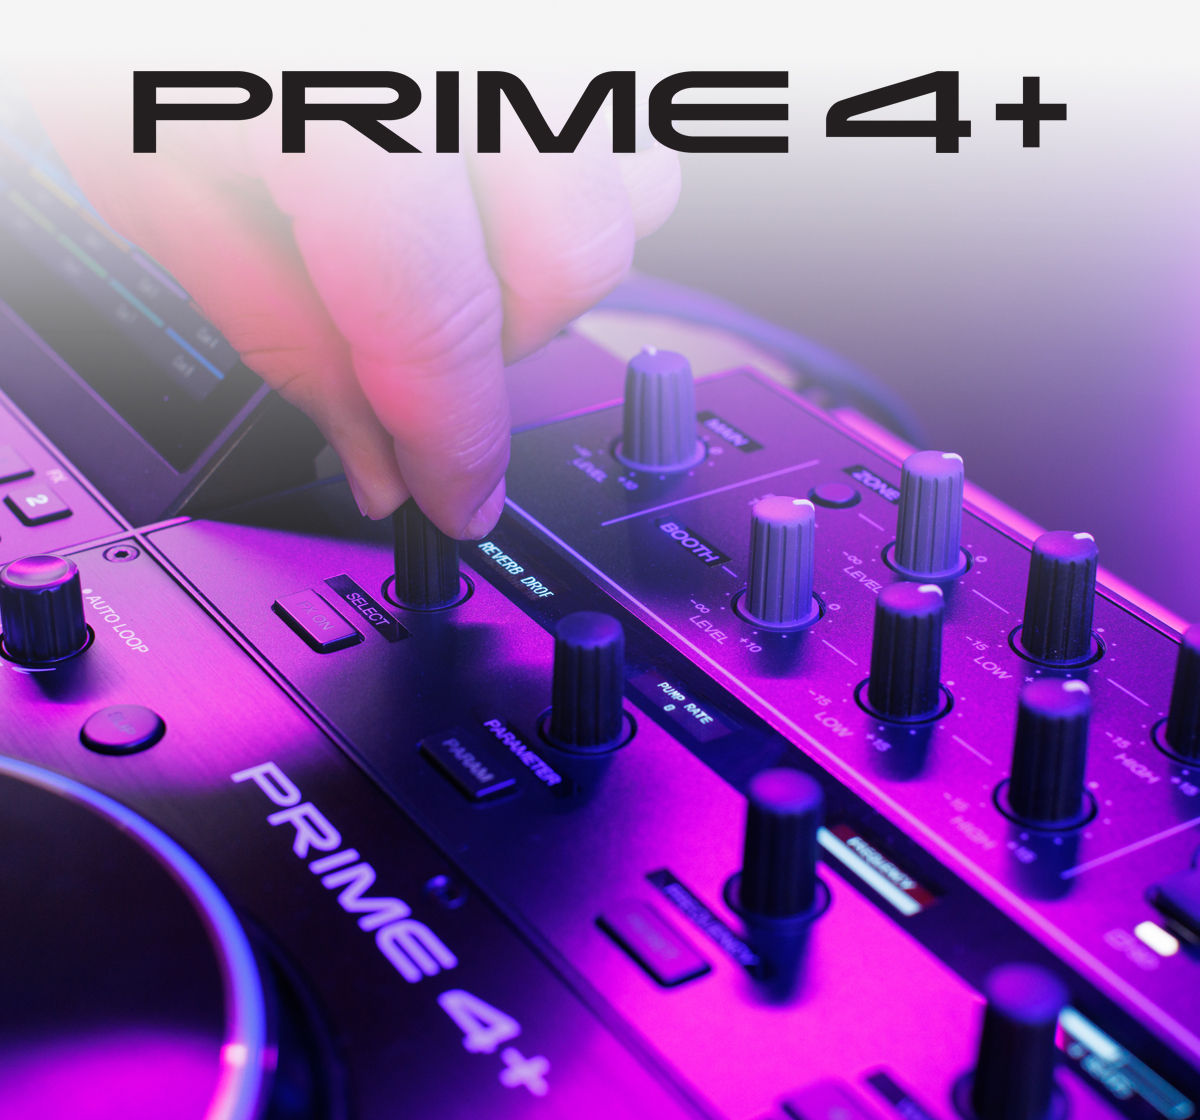 Prime4+